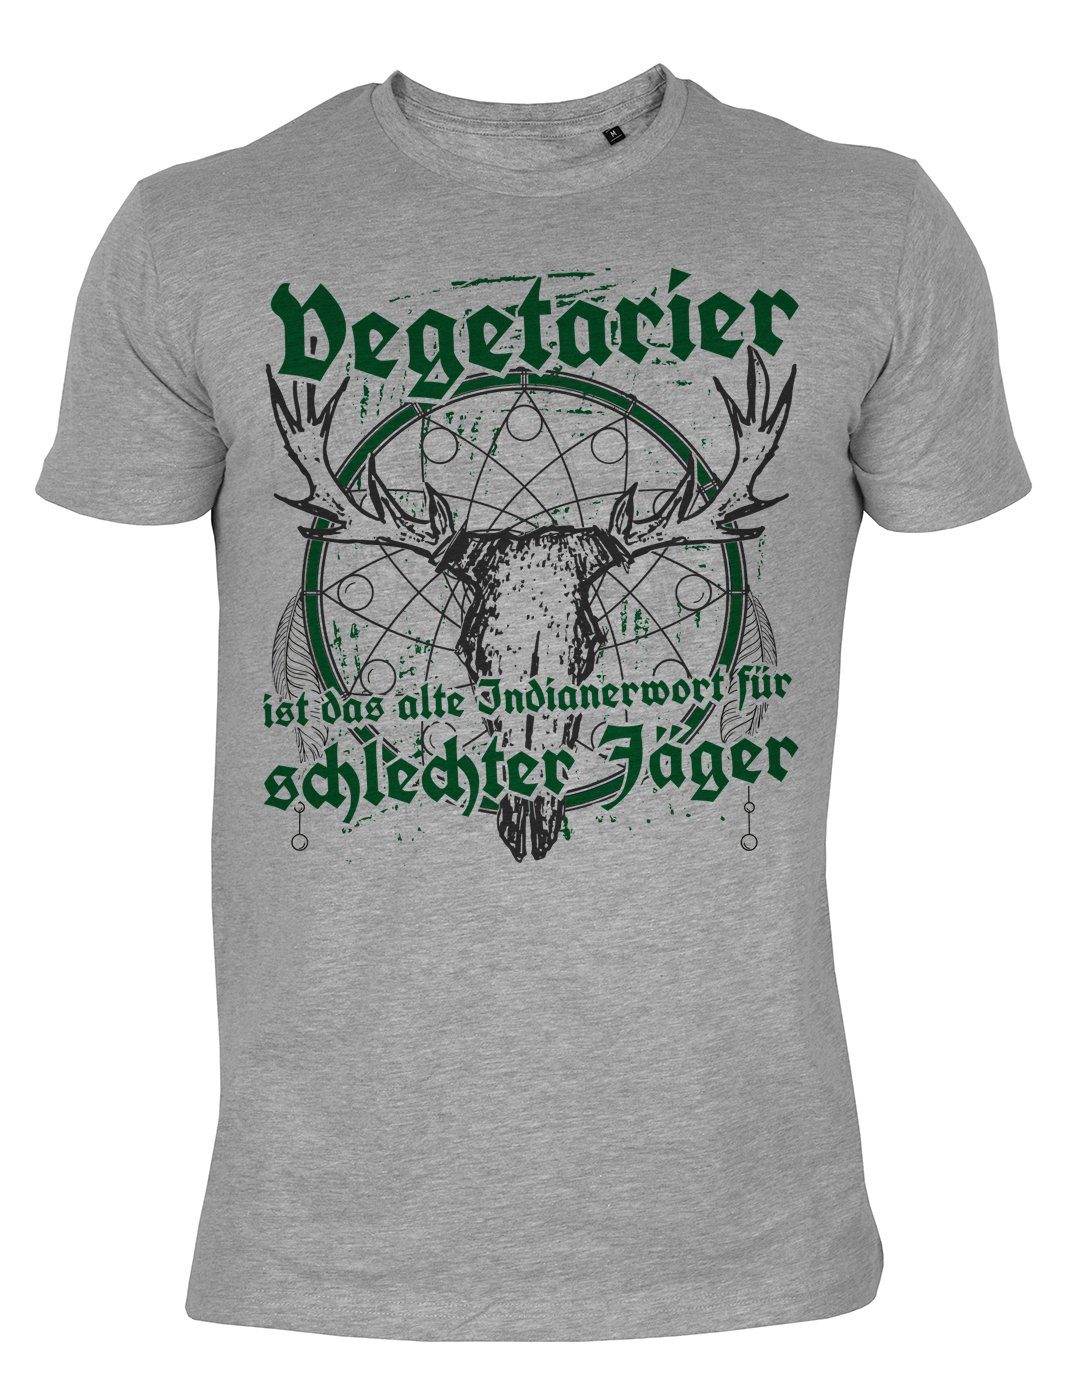 ....schlechter Jäger Tini Shirt - Jäger Sprüche Vegetarier Shirt Shirt: das T-Shirt alte ist Jäger Vegetarier